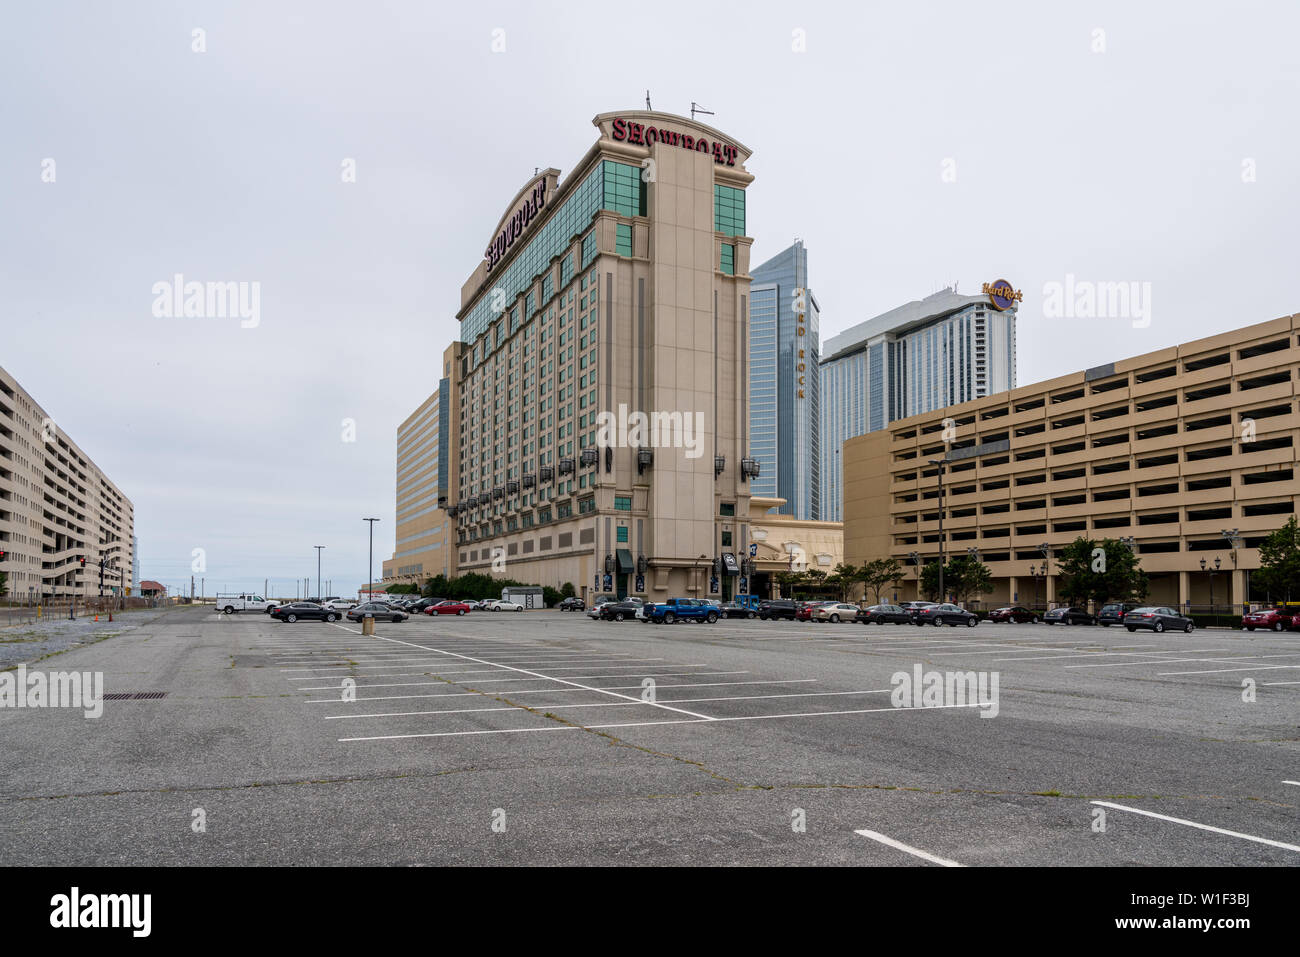 free casino parking in atlantic city